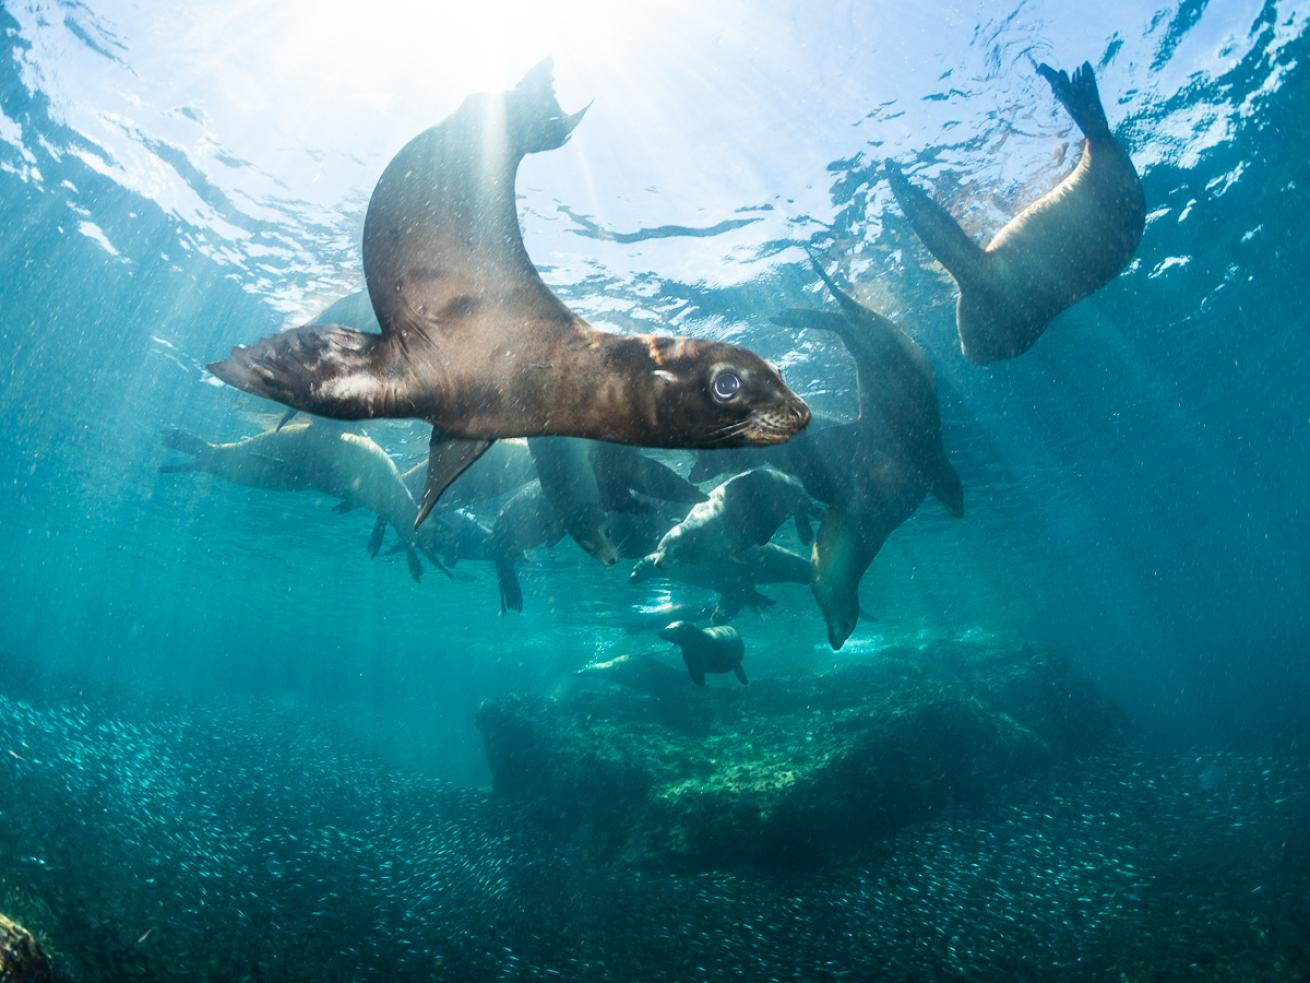 Seal and Sunburst Underwater